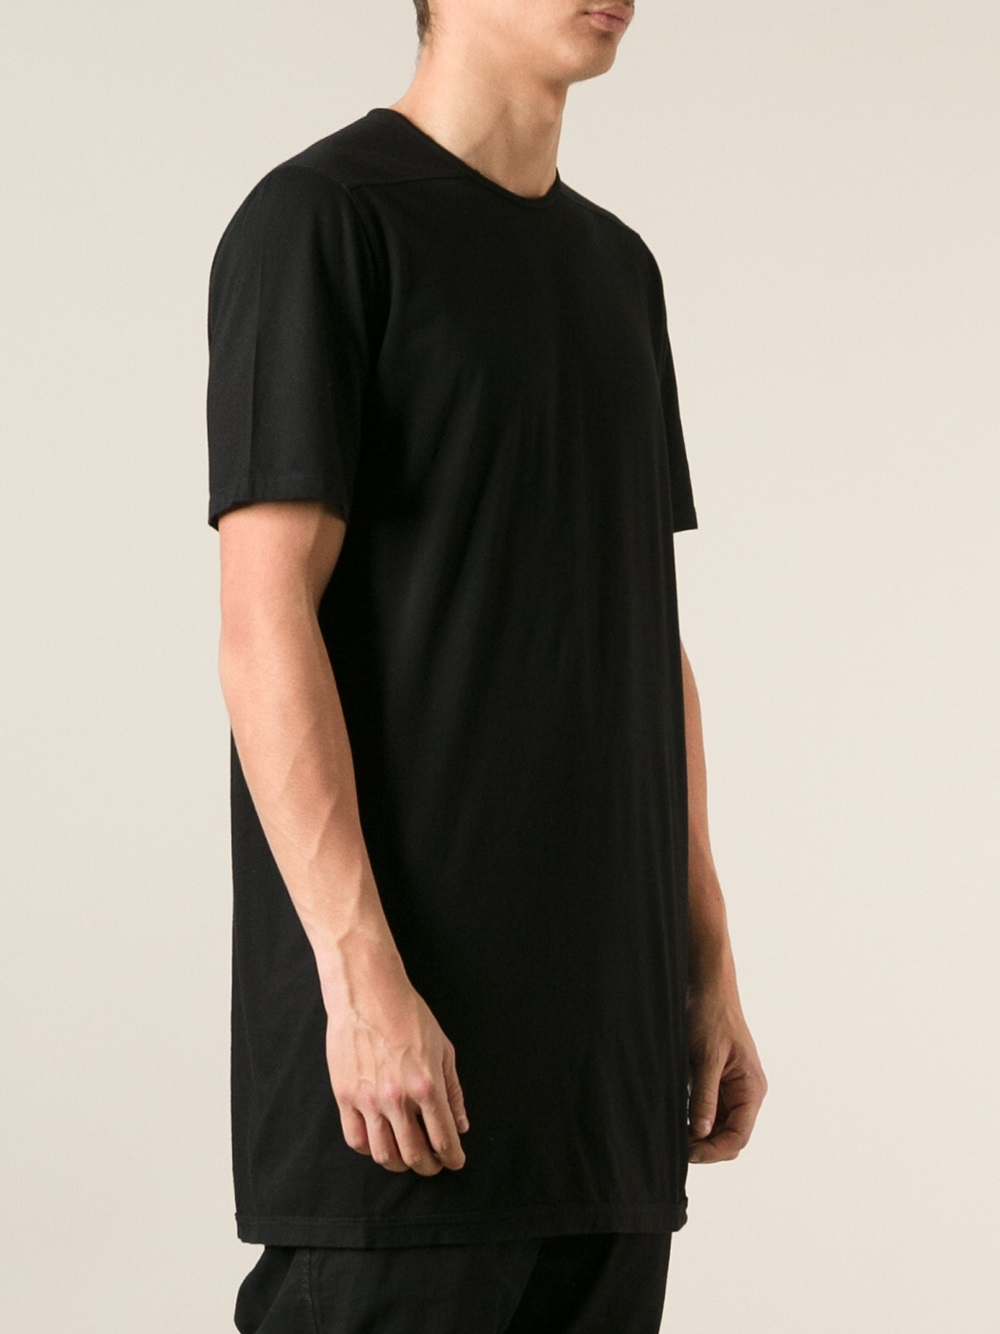 Lyst - Drkshdw By Rick Owens Oversized Tshirt in Black for Men